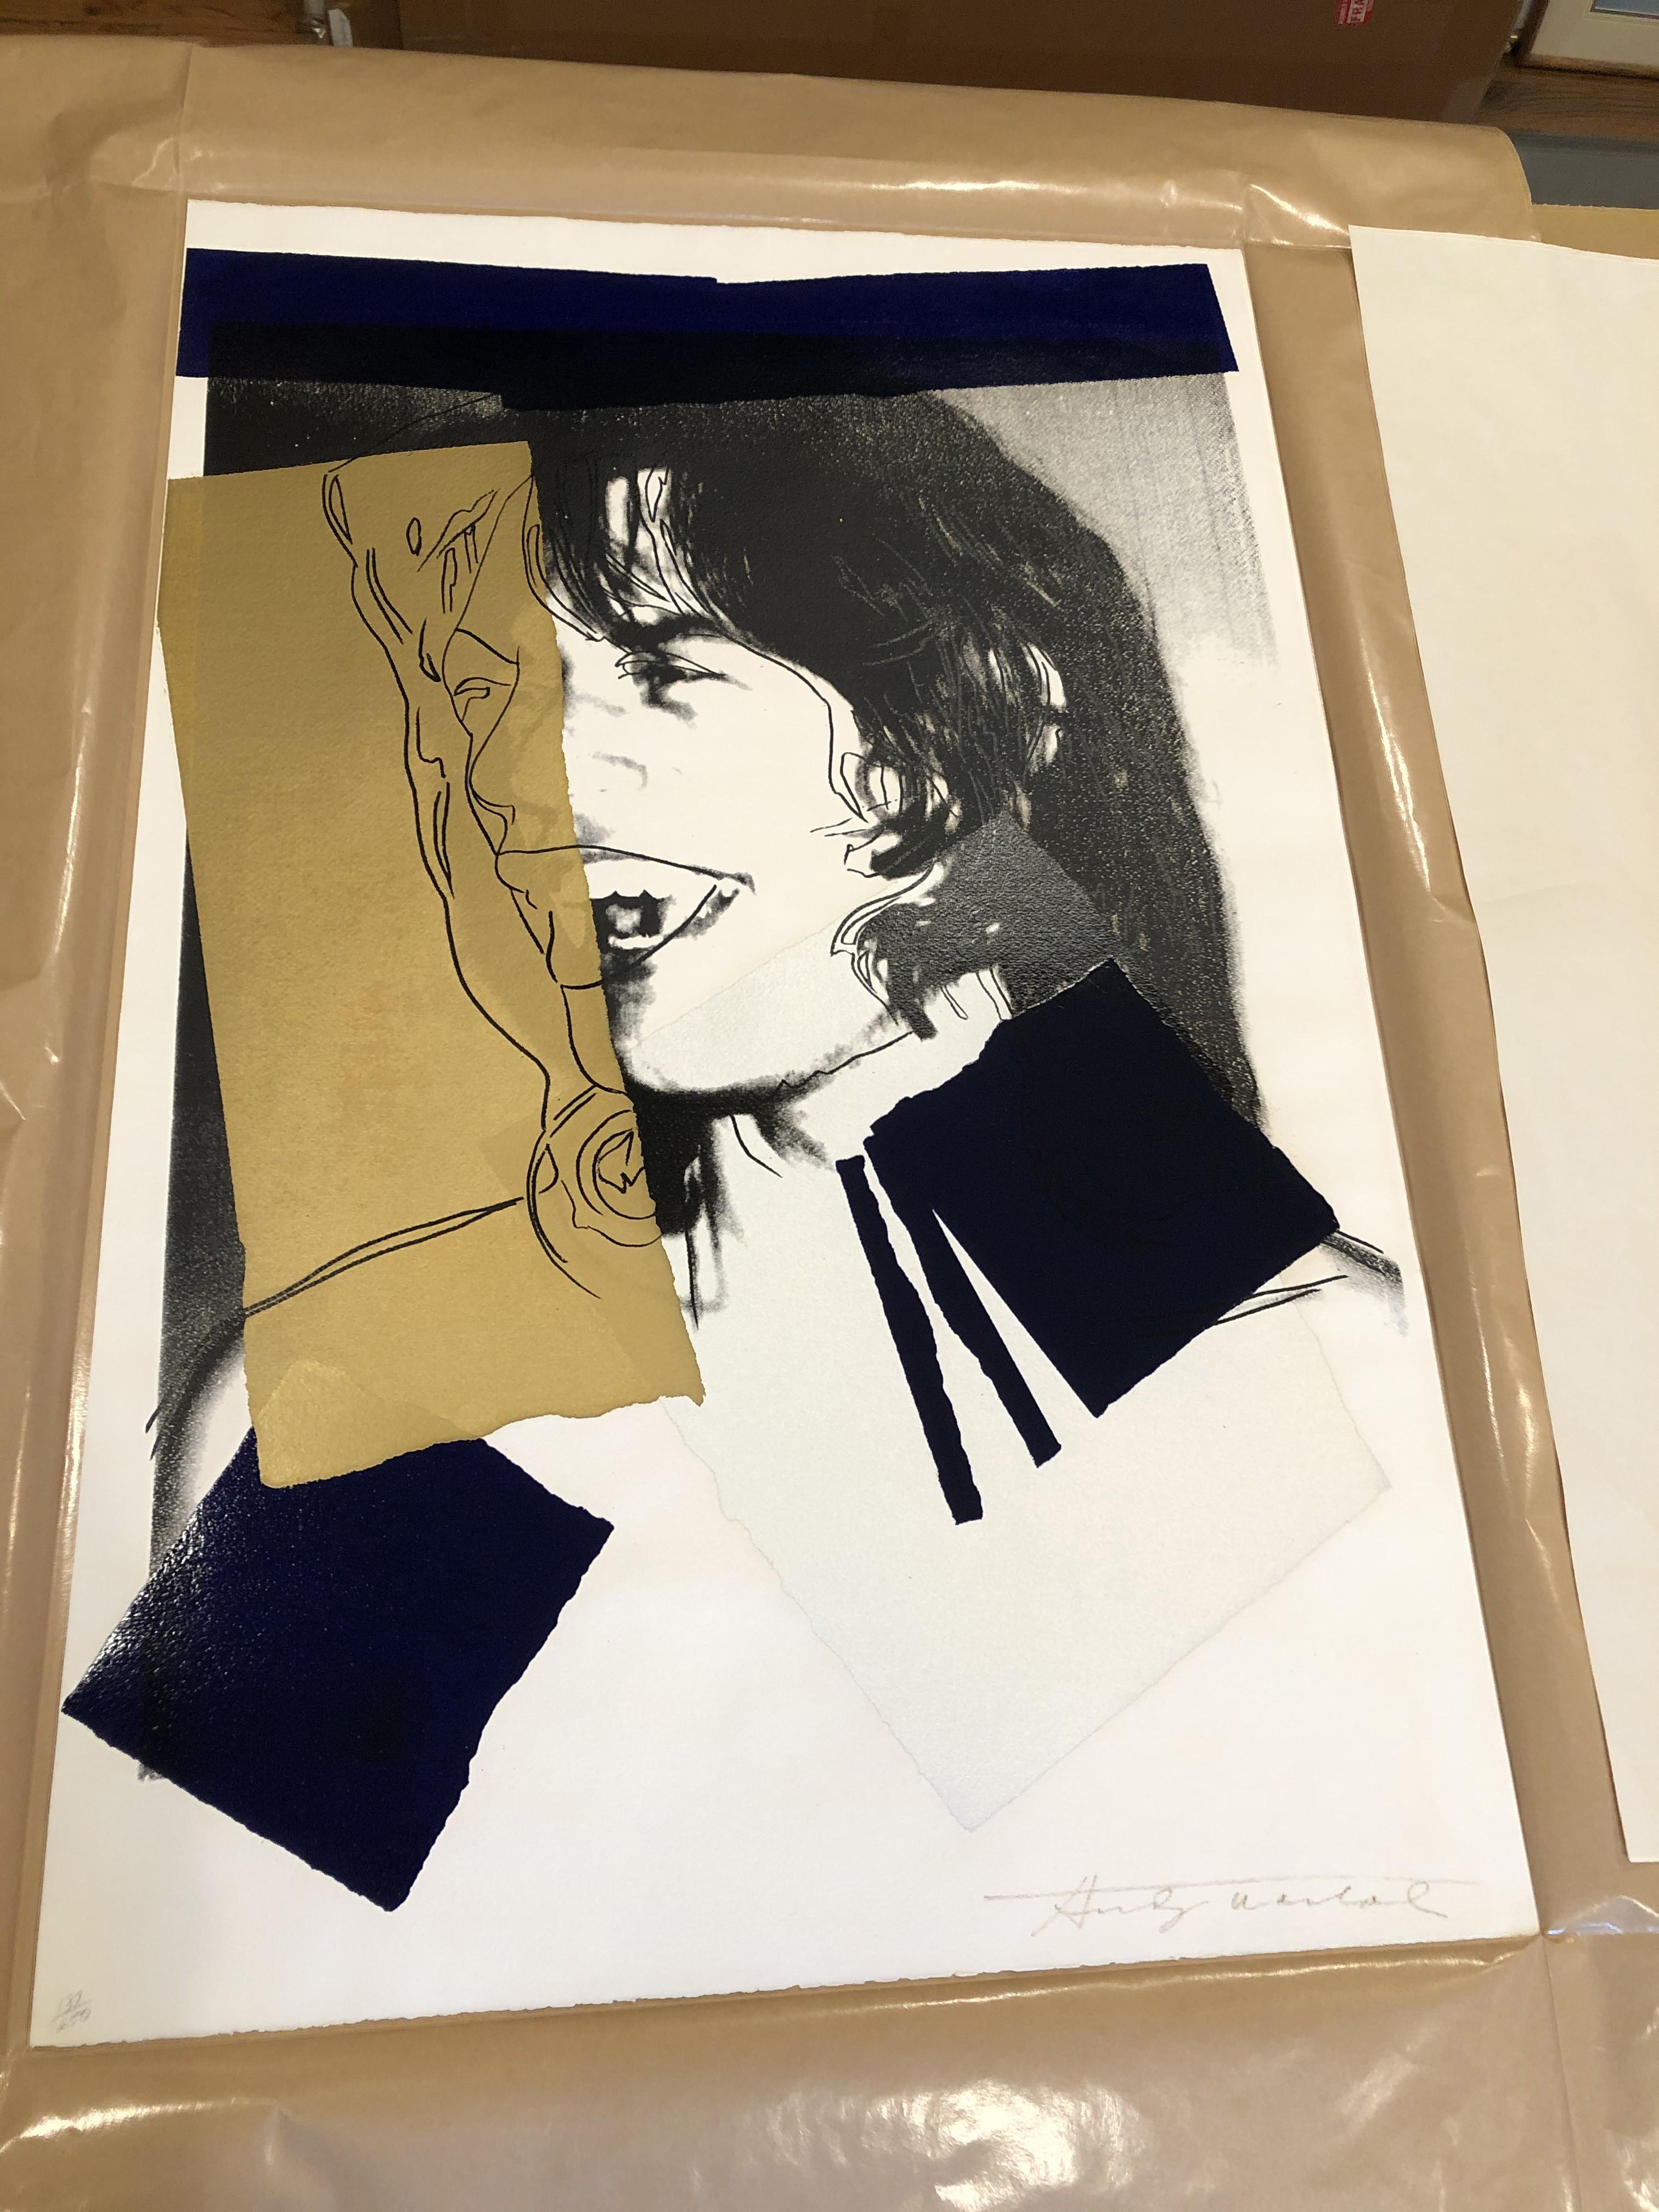 Andy Warhol Mick Jagger
Artist: Andy Warhol
Medium: Original screenprint on Arches Aquarelle paper
Portfolio: Mick Jagger
Year: 1975
Edition: 137/250
Framed Size: 59